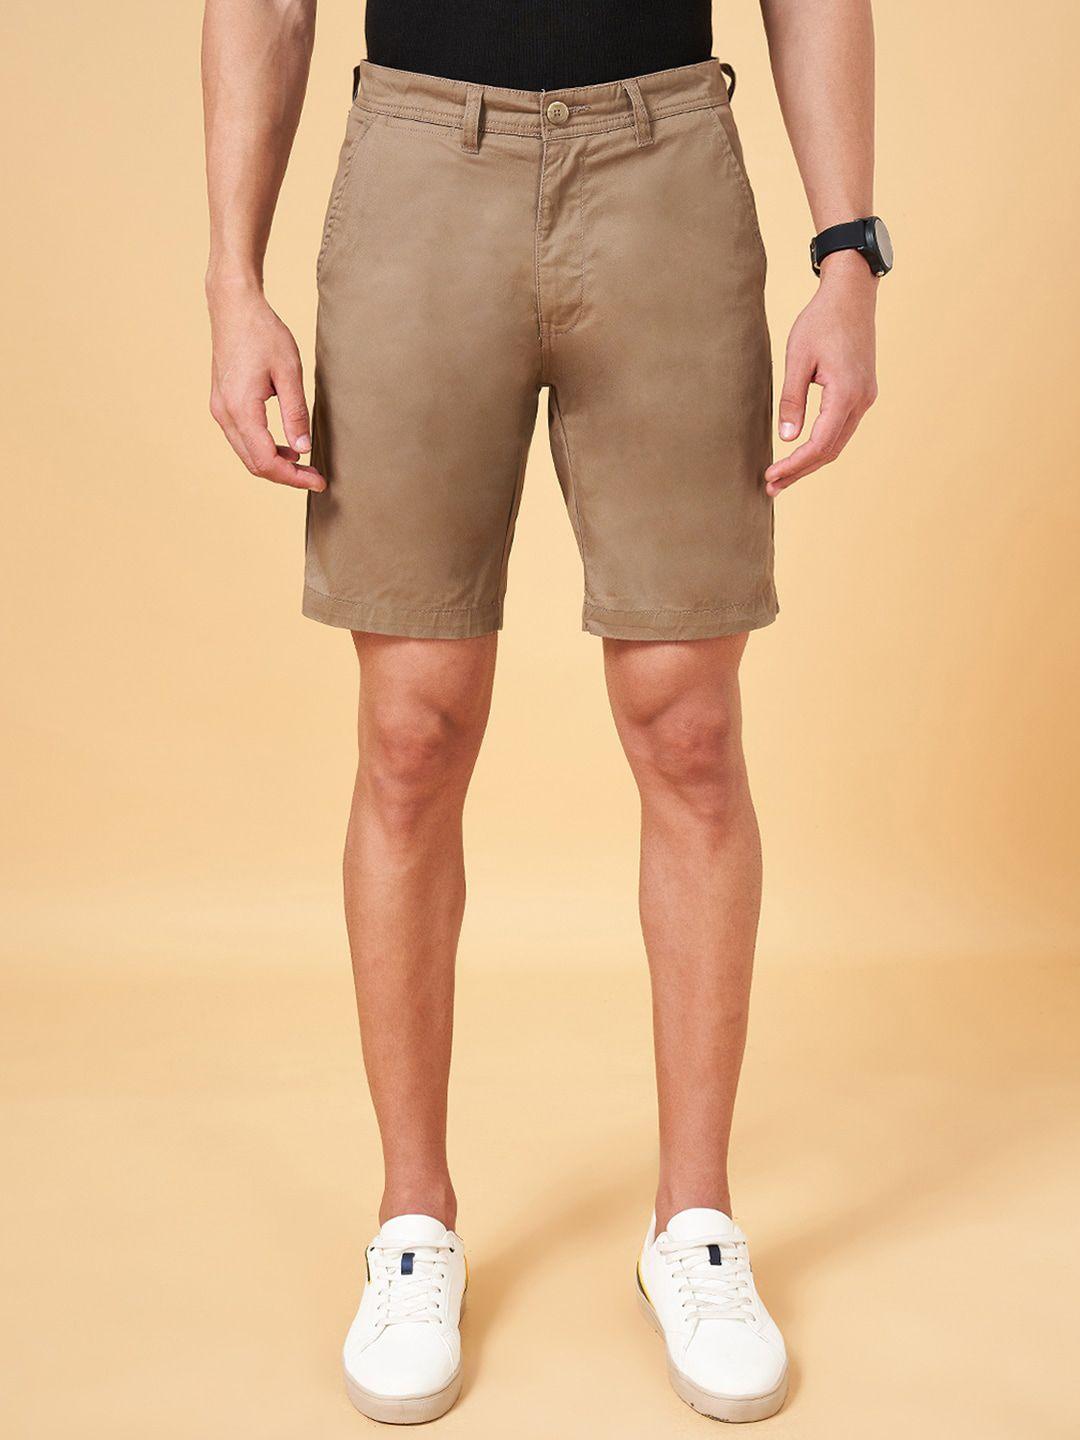 byford by pantaloons men slim fit mid rise shorts